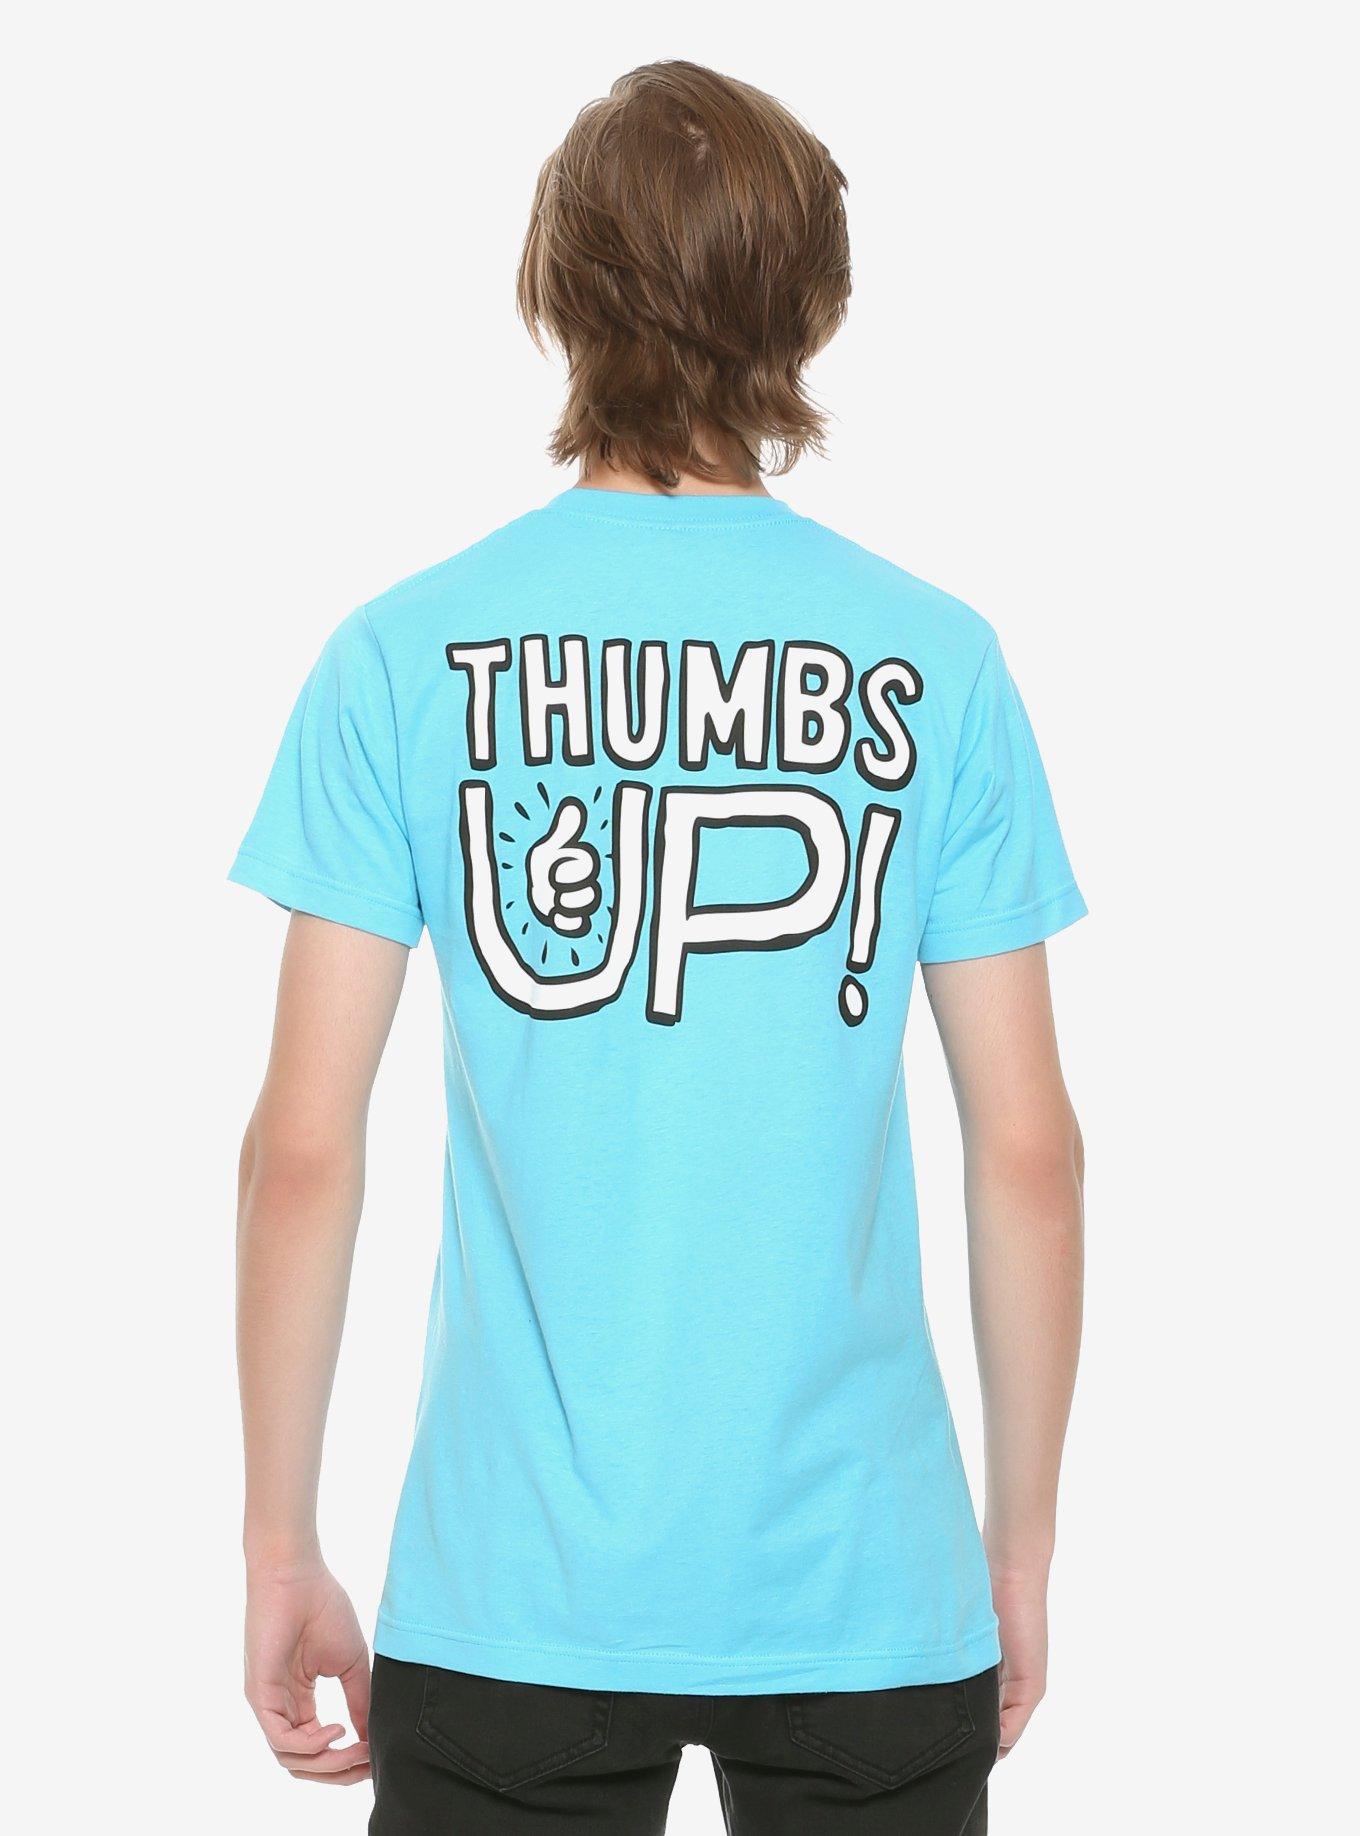 Mac Miller Thumbs Up T-Shirt - For Men's or Women's 